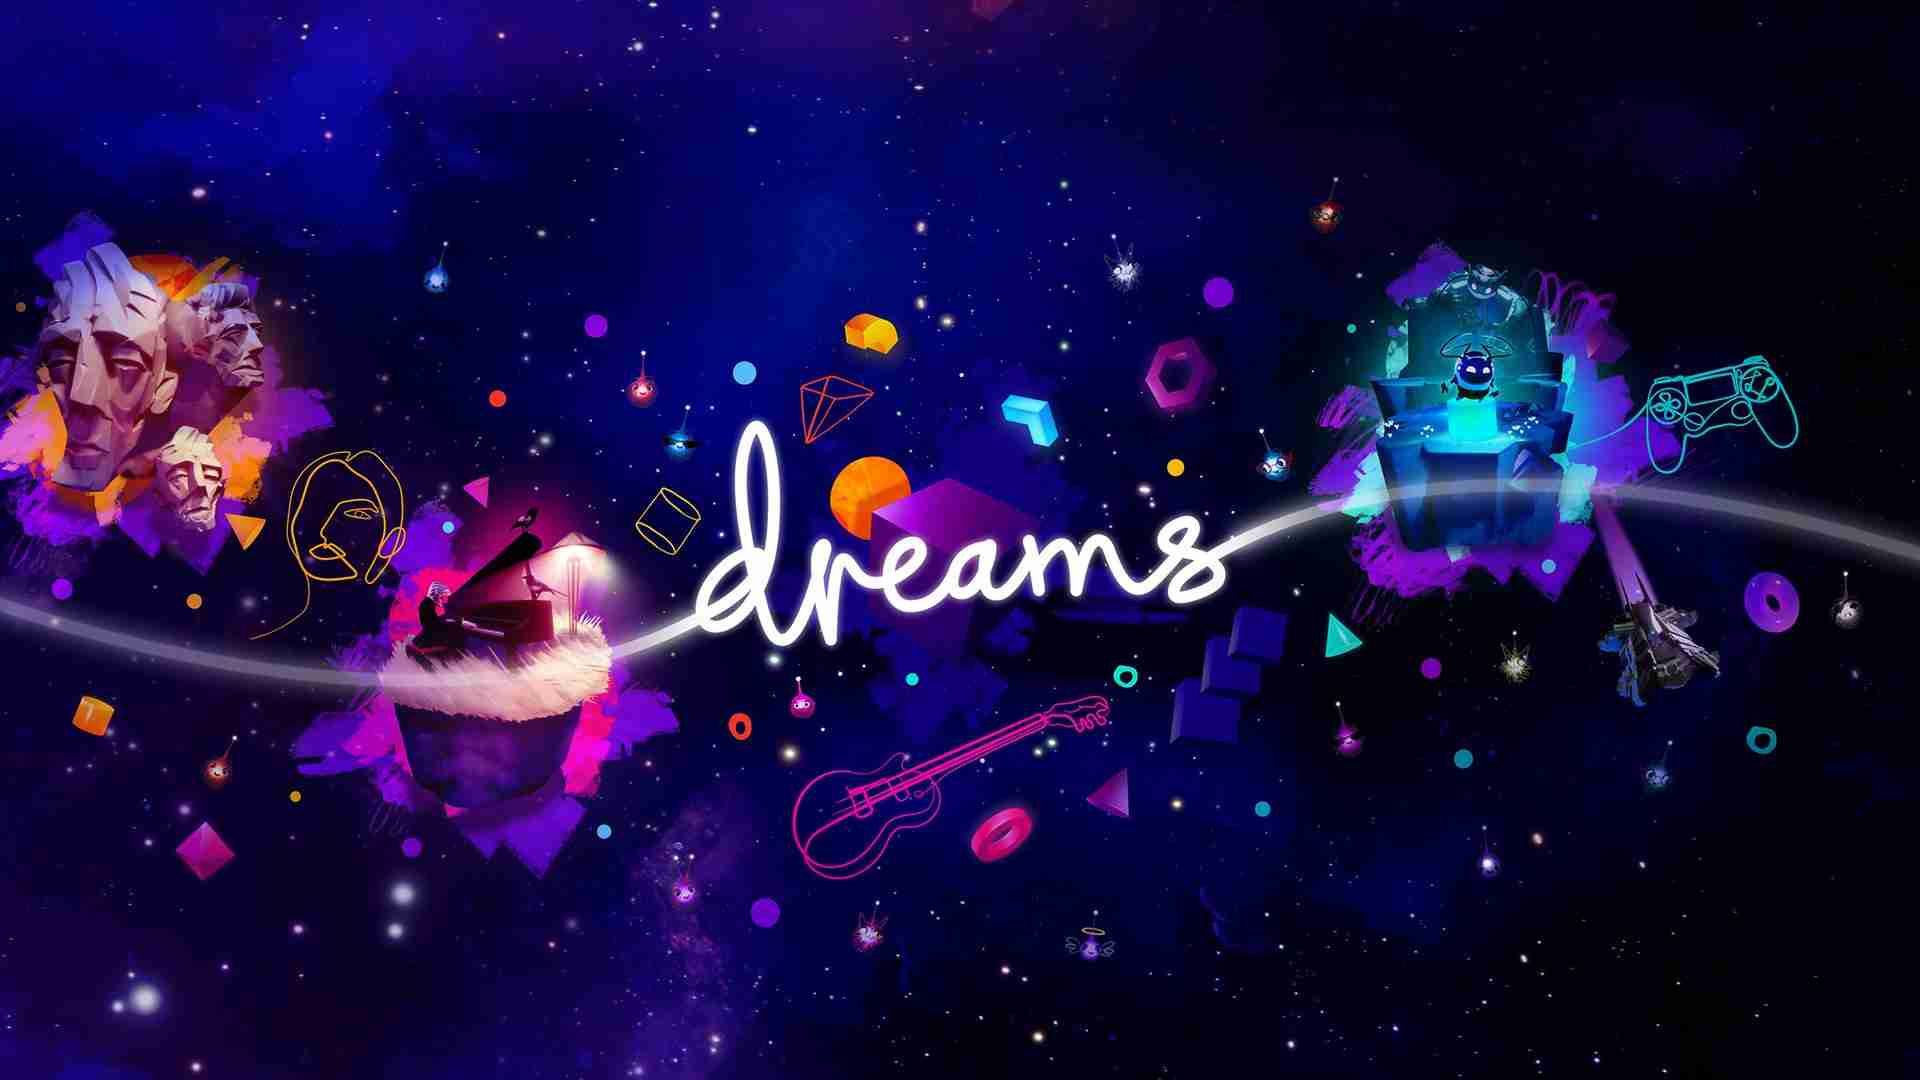 Dreams – “Art’s Dream” Gameplay Trailer